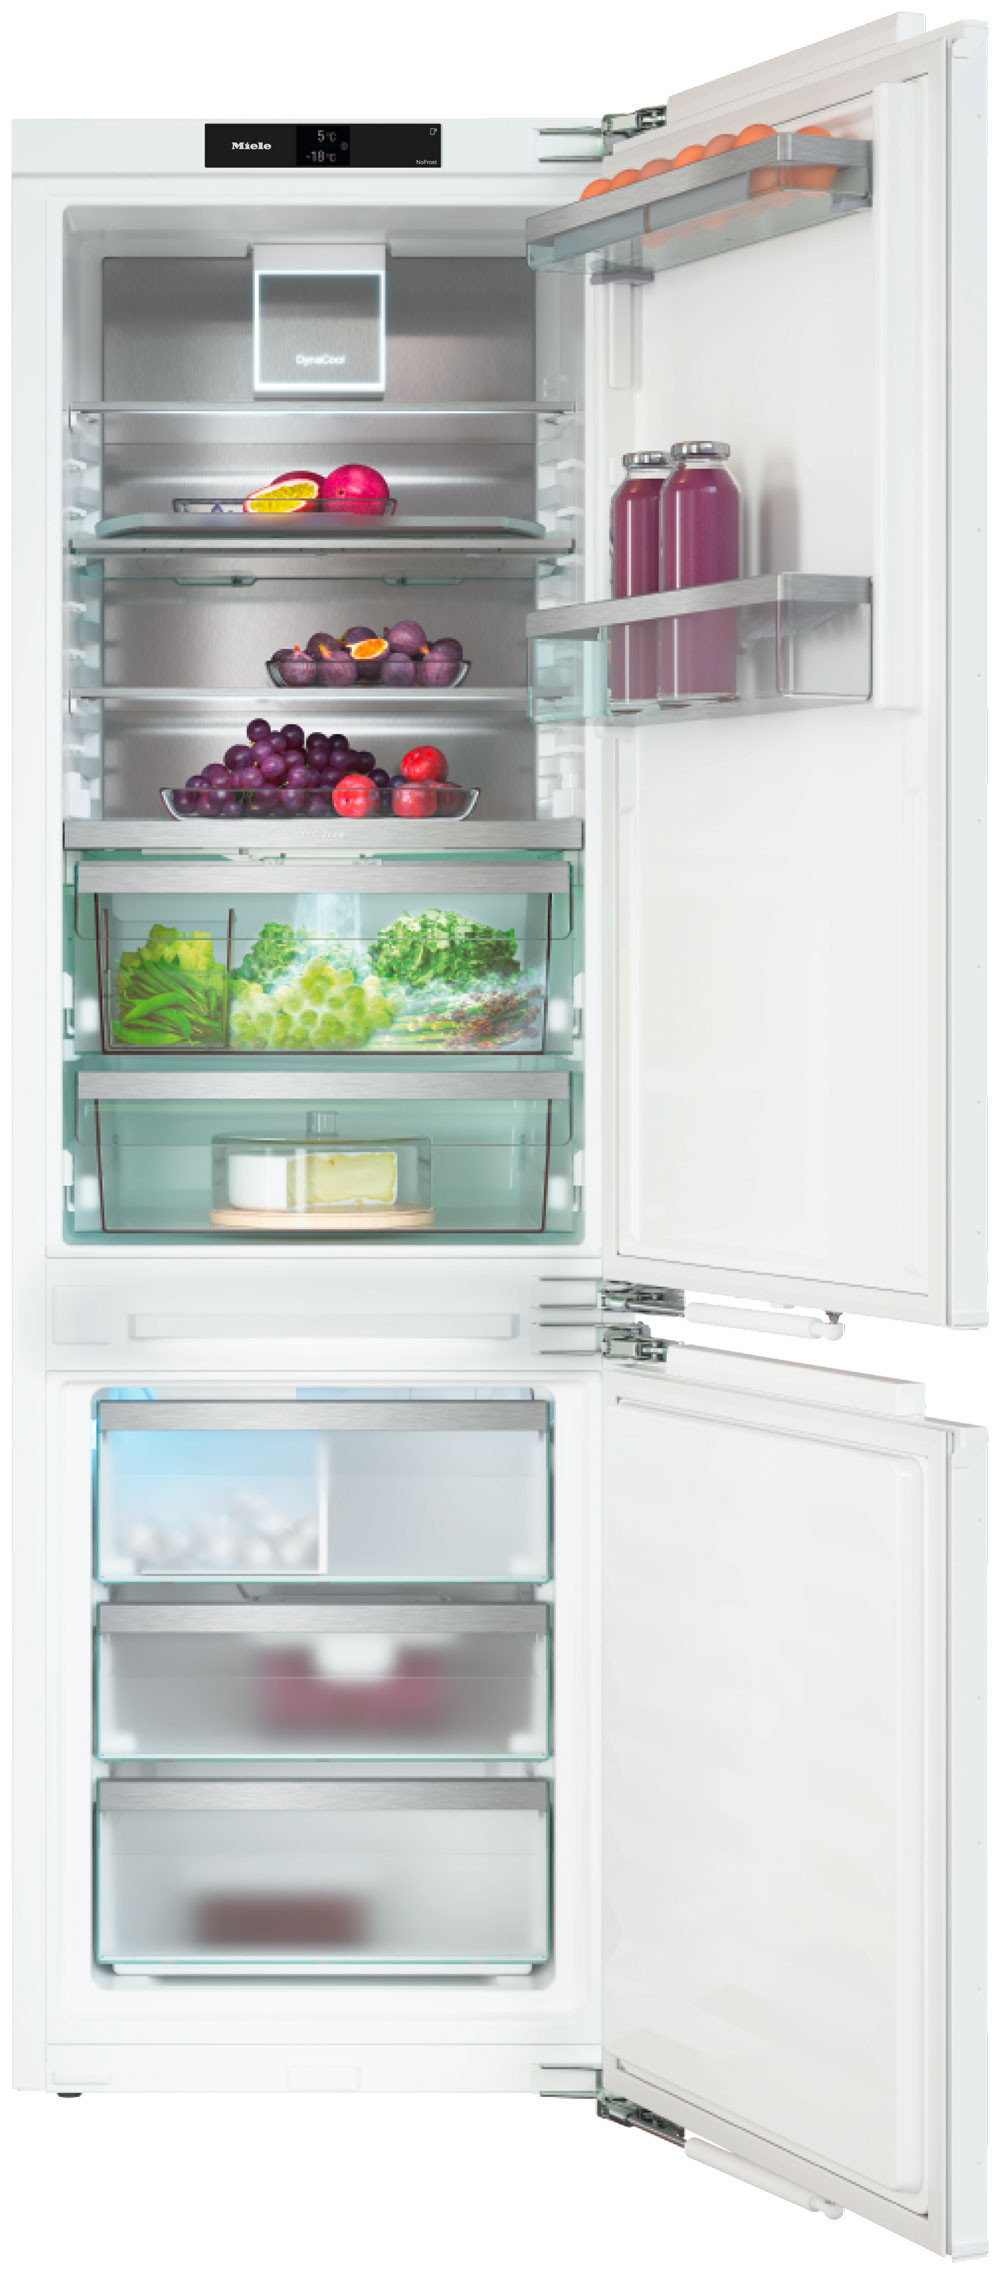 Miele KFN 7795 D Integrated Fridge Freezer featured image